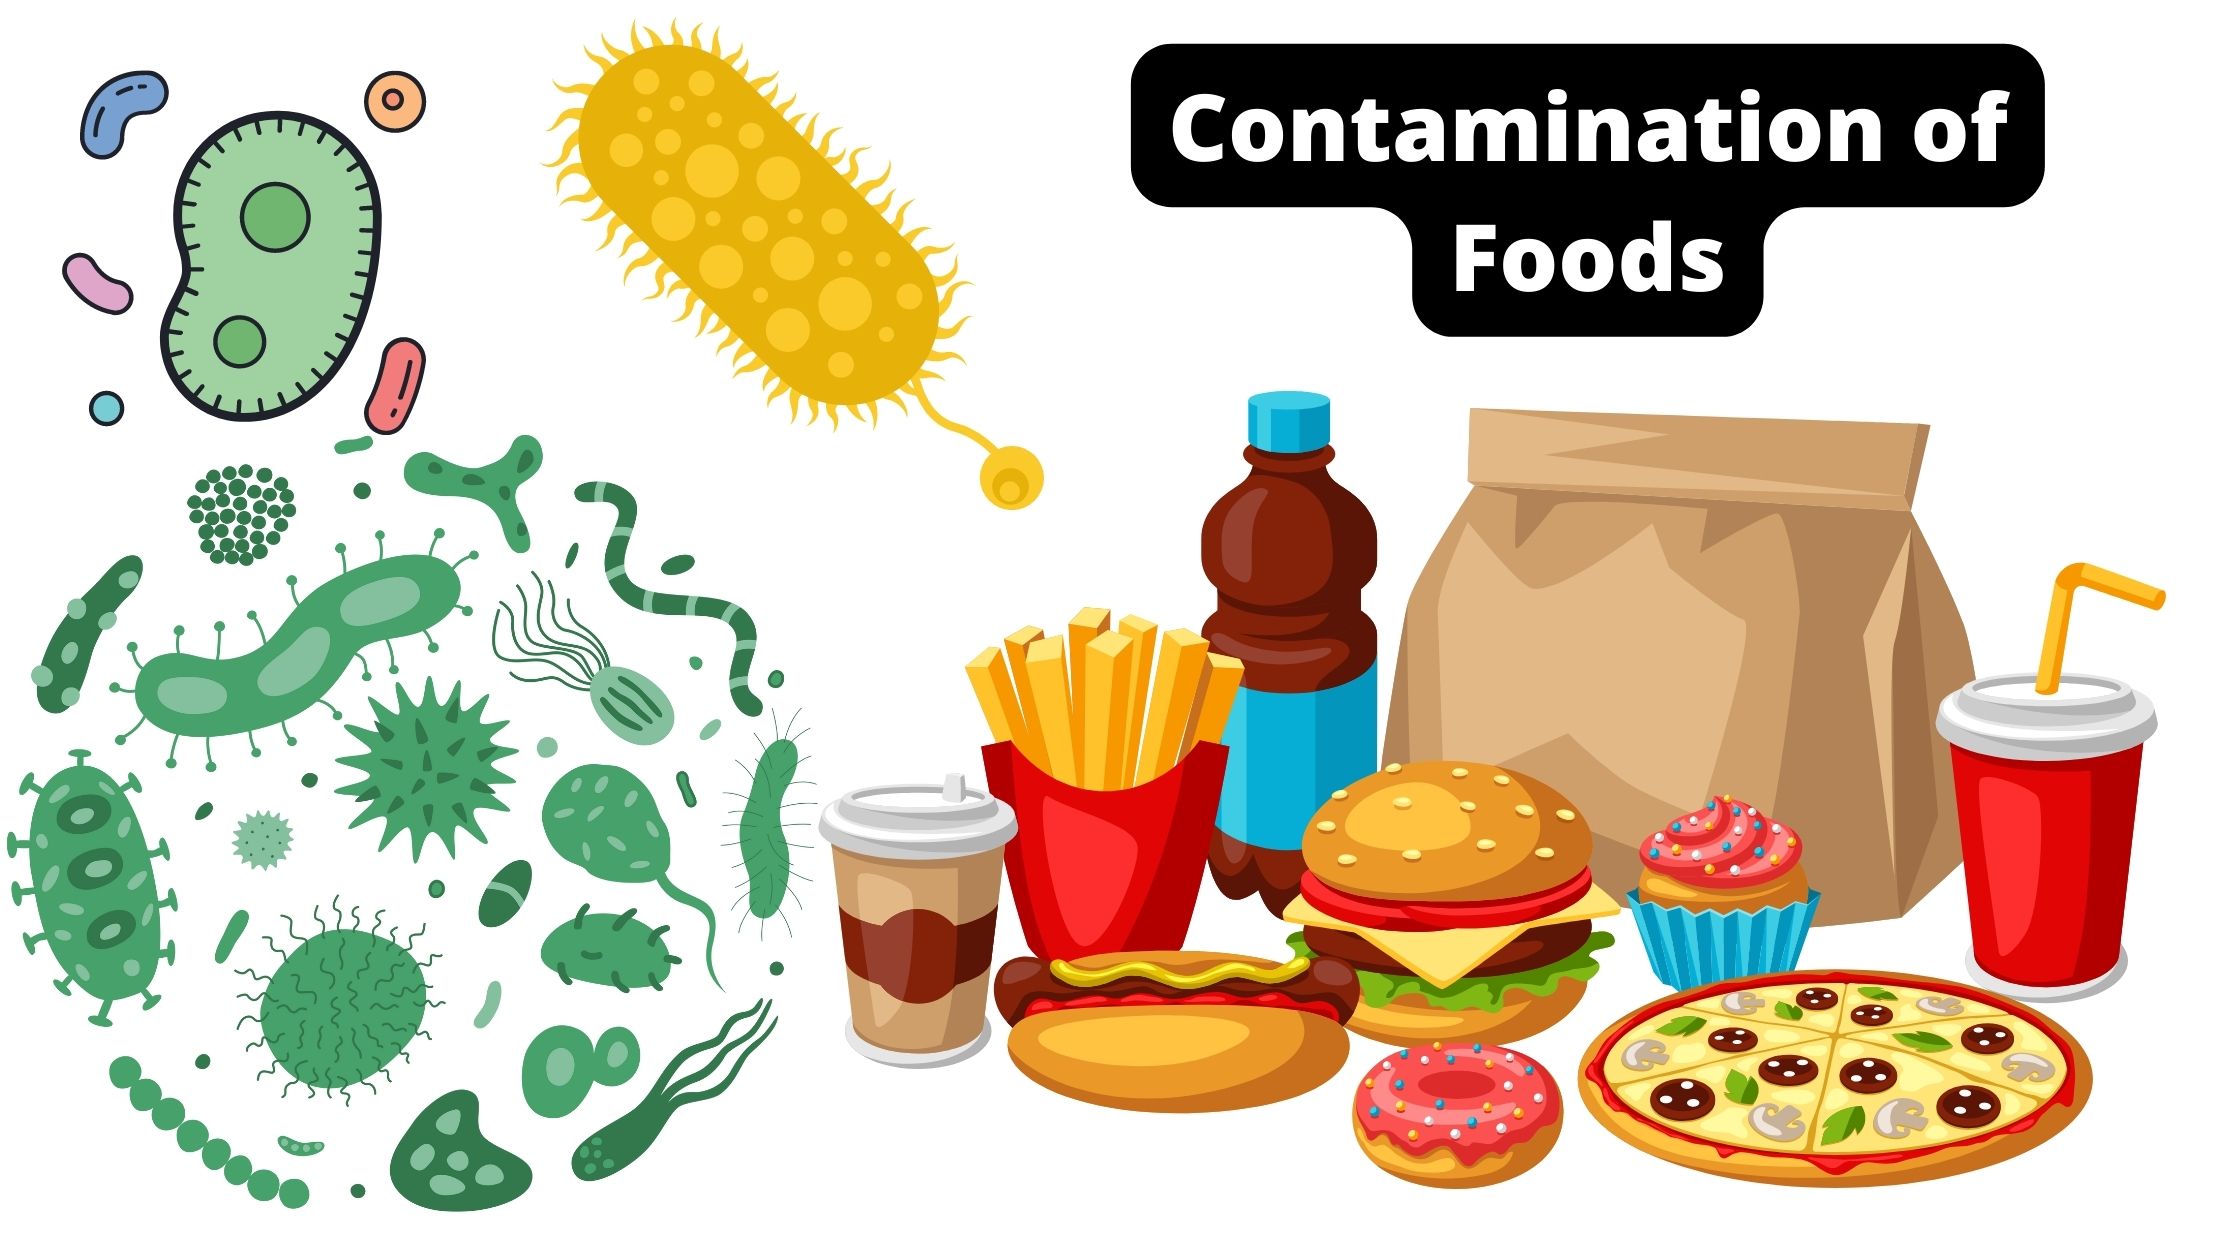 Contamination of Foods